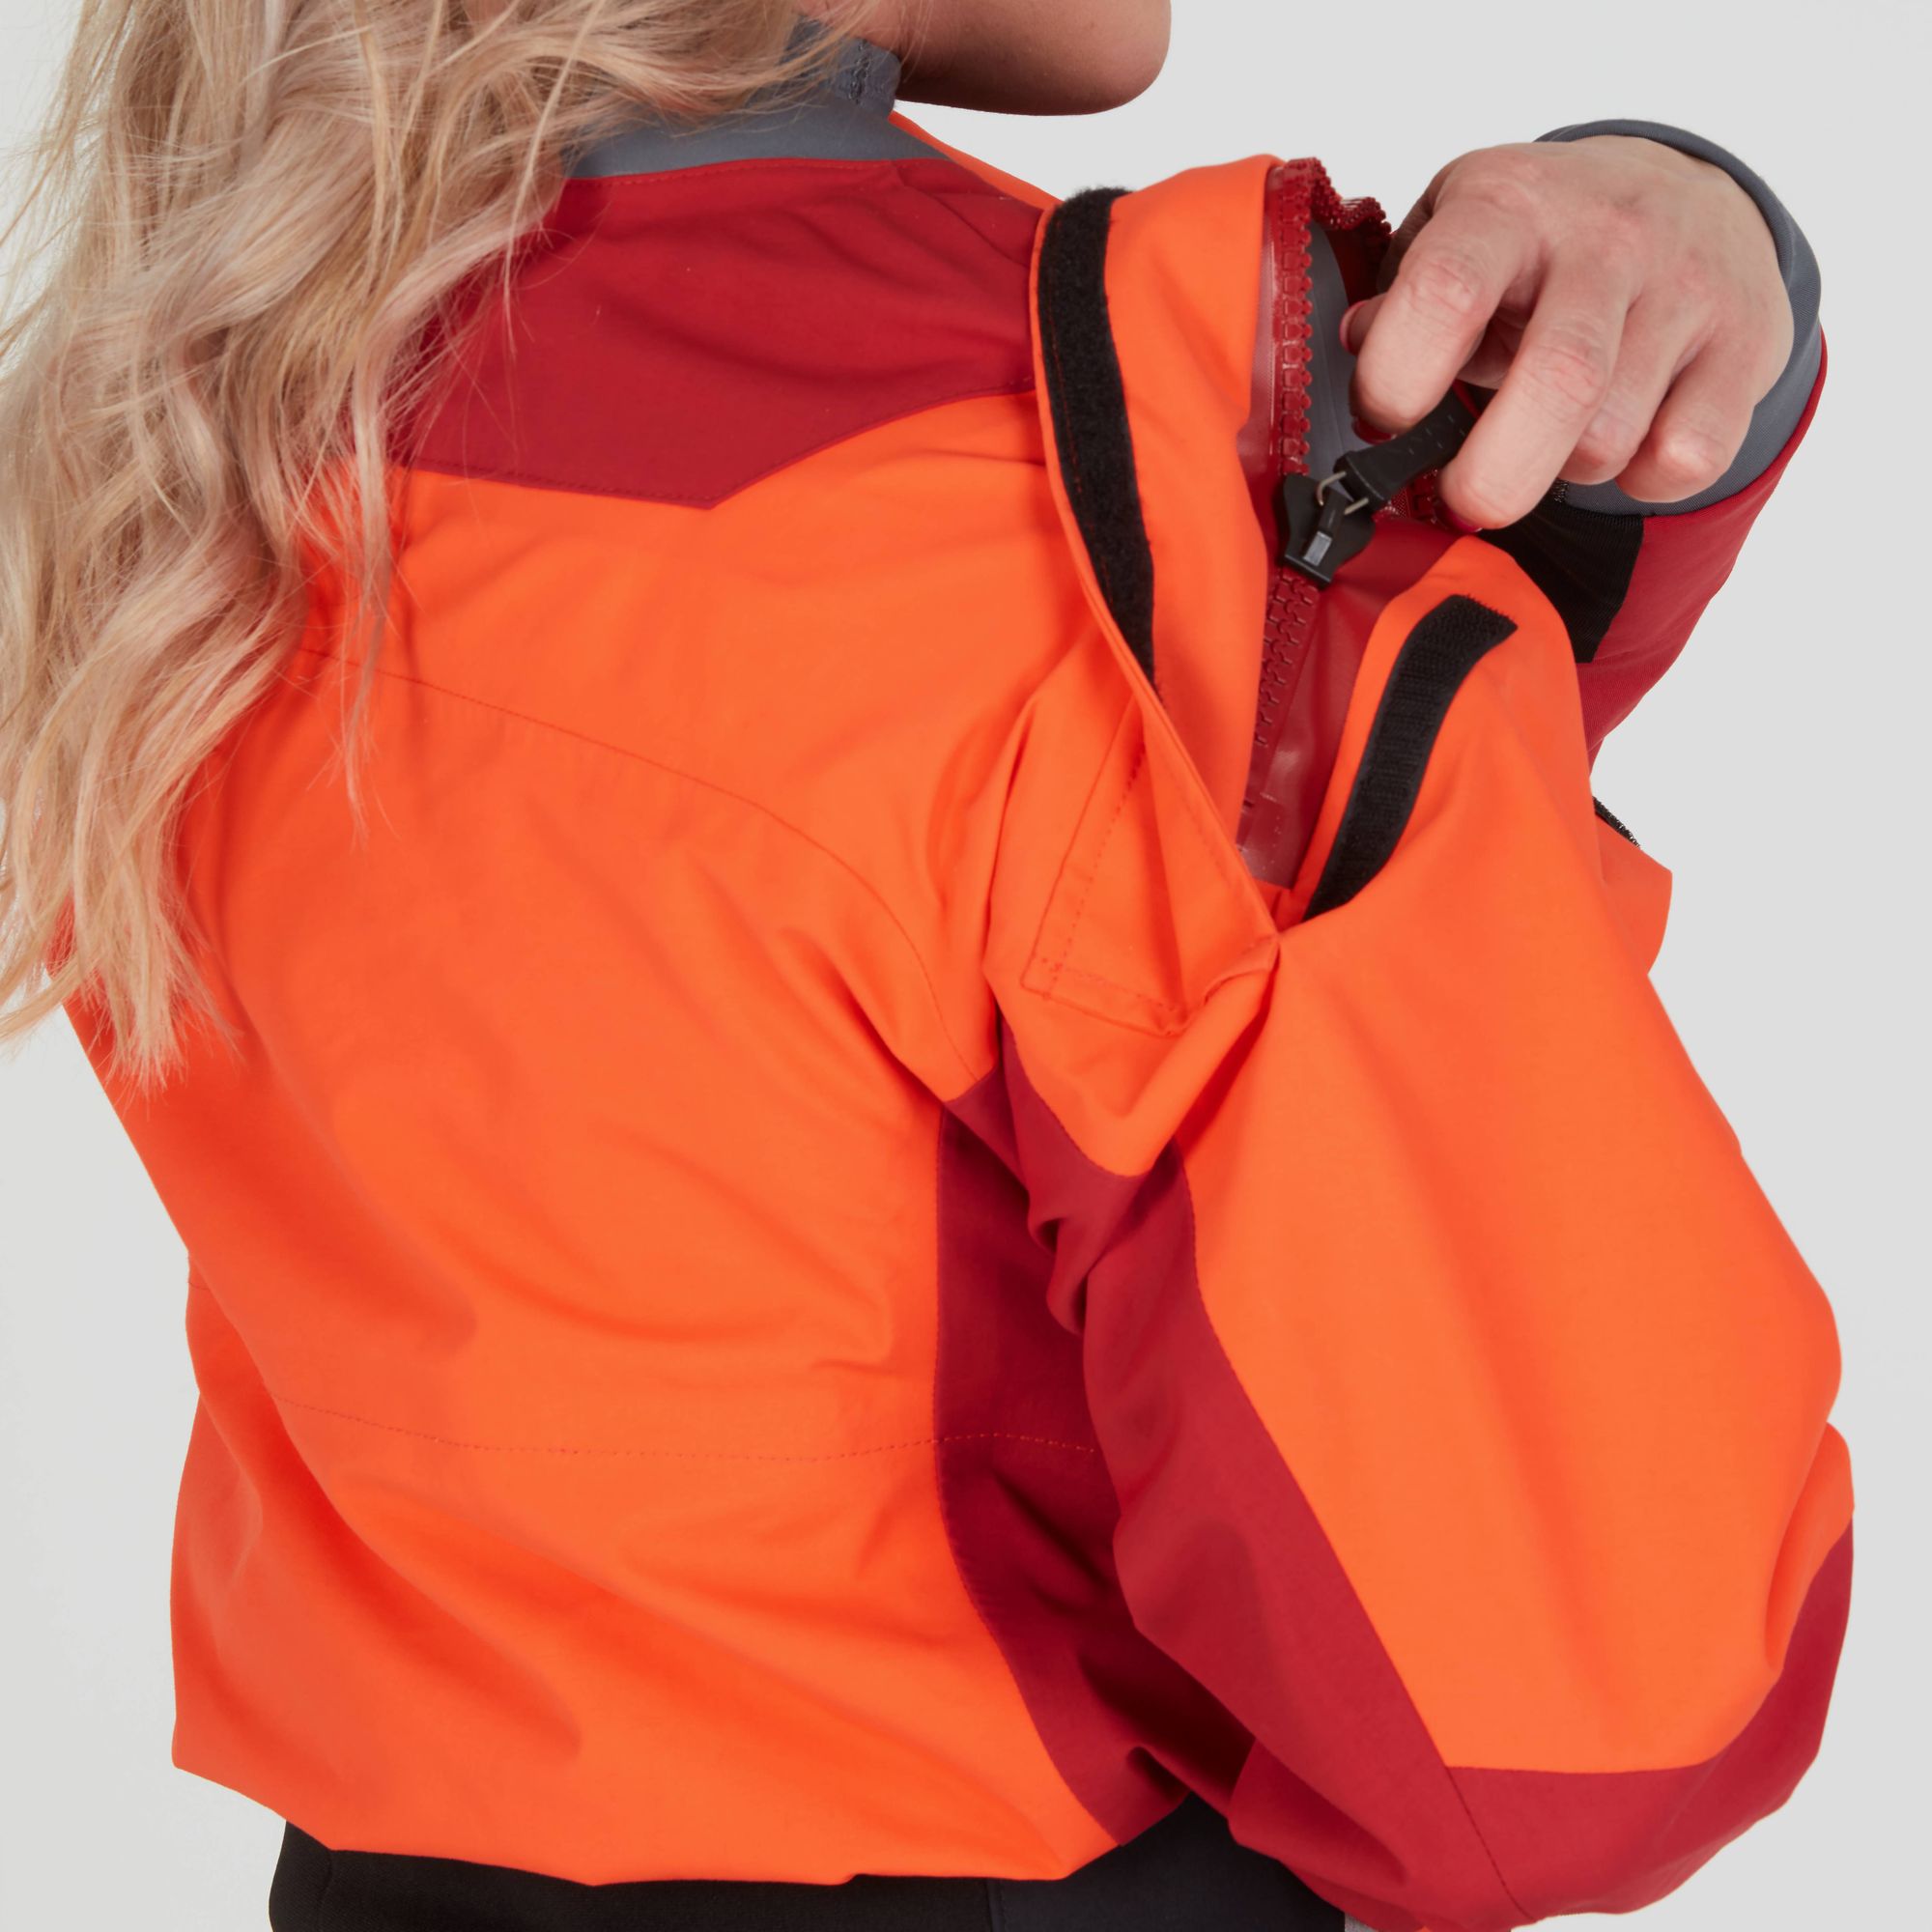 NRS Axiom Damen GORE-TEX Pro Dry Suit Kajak Kanu Trockenanzug